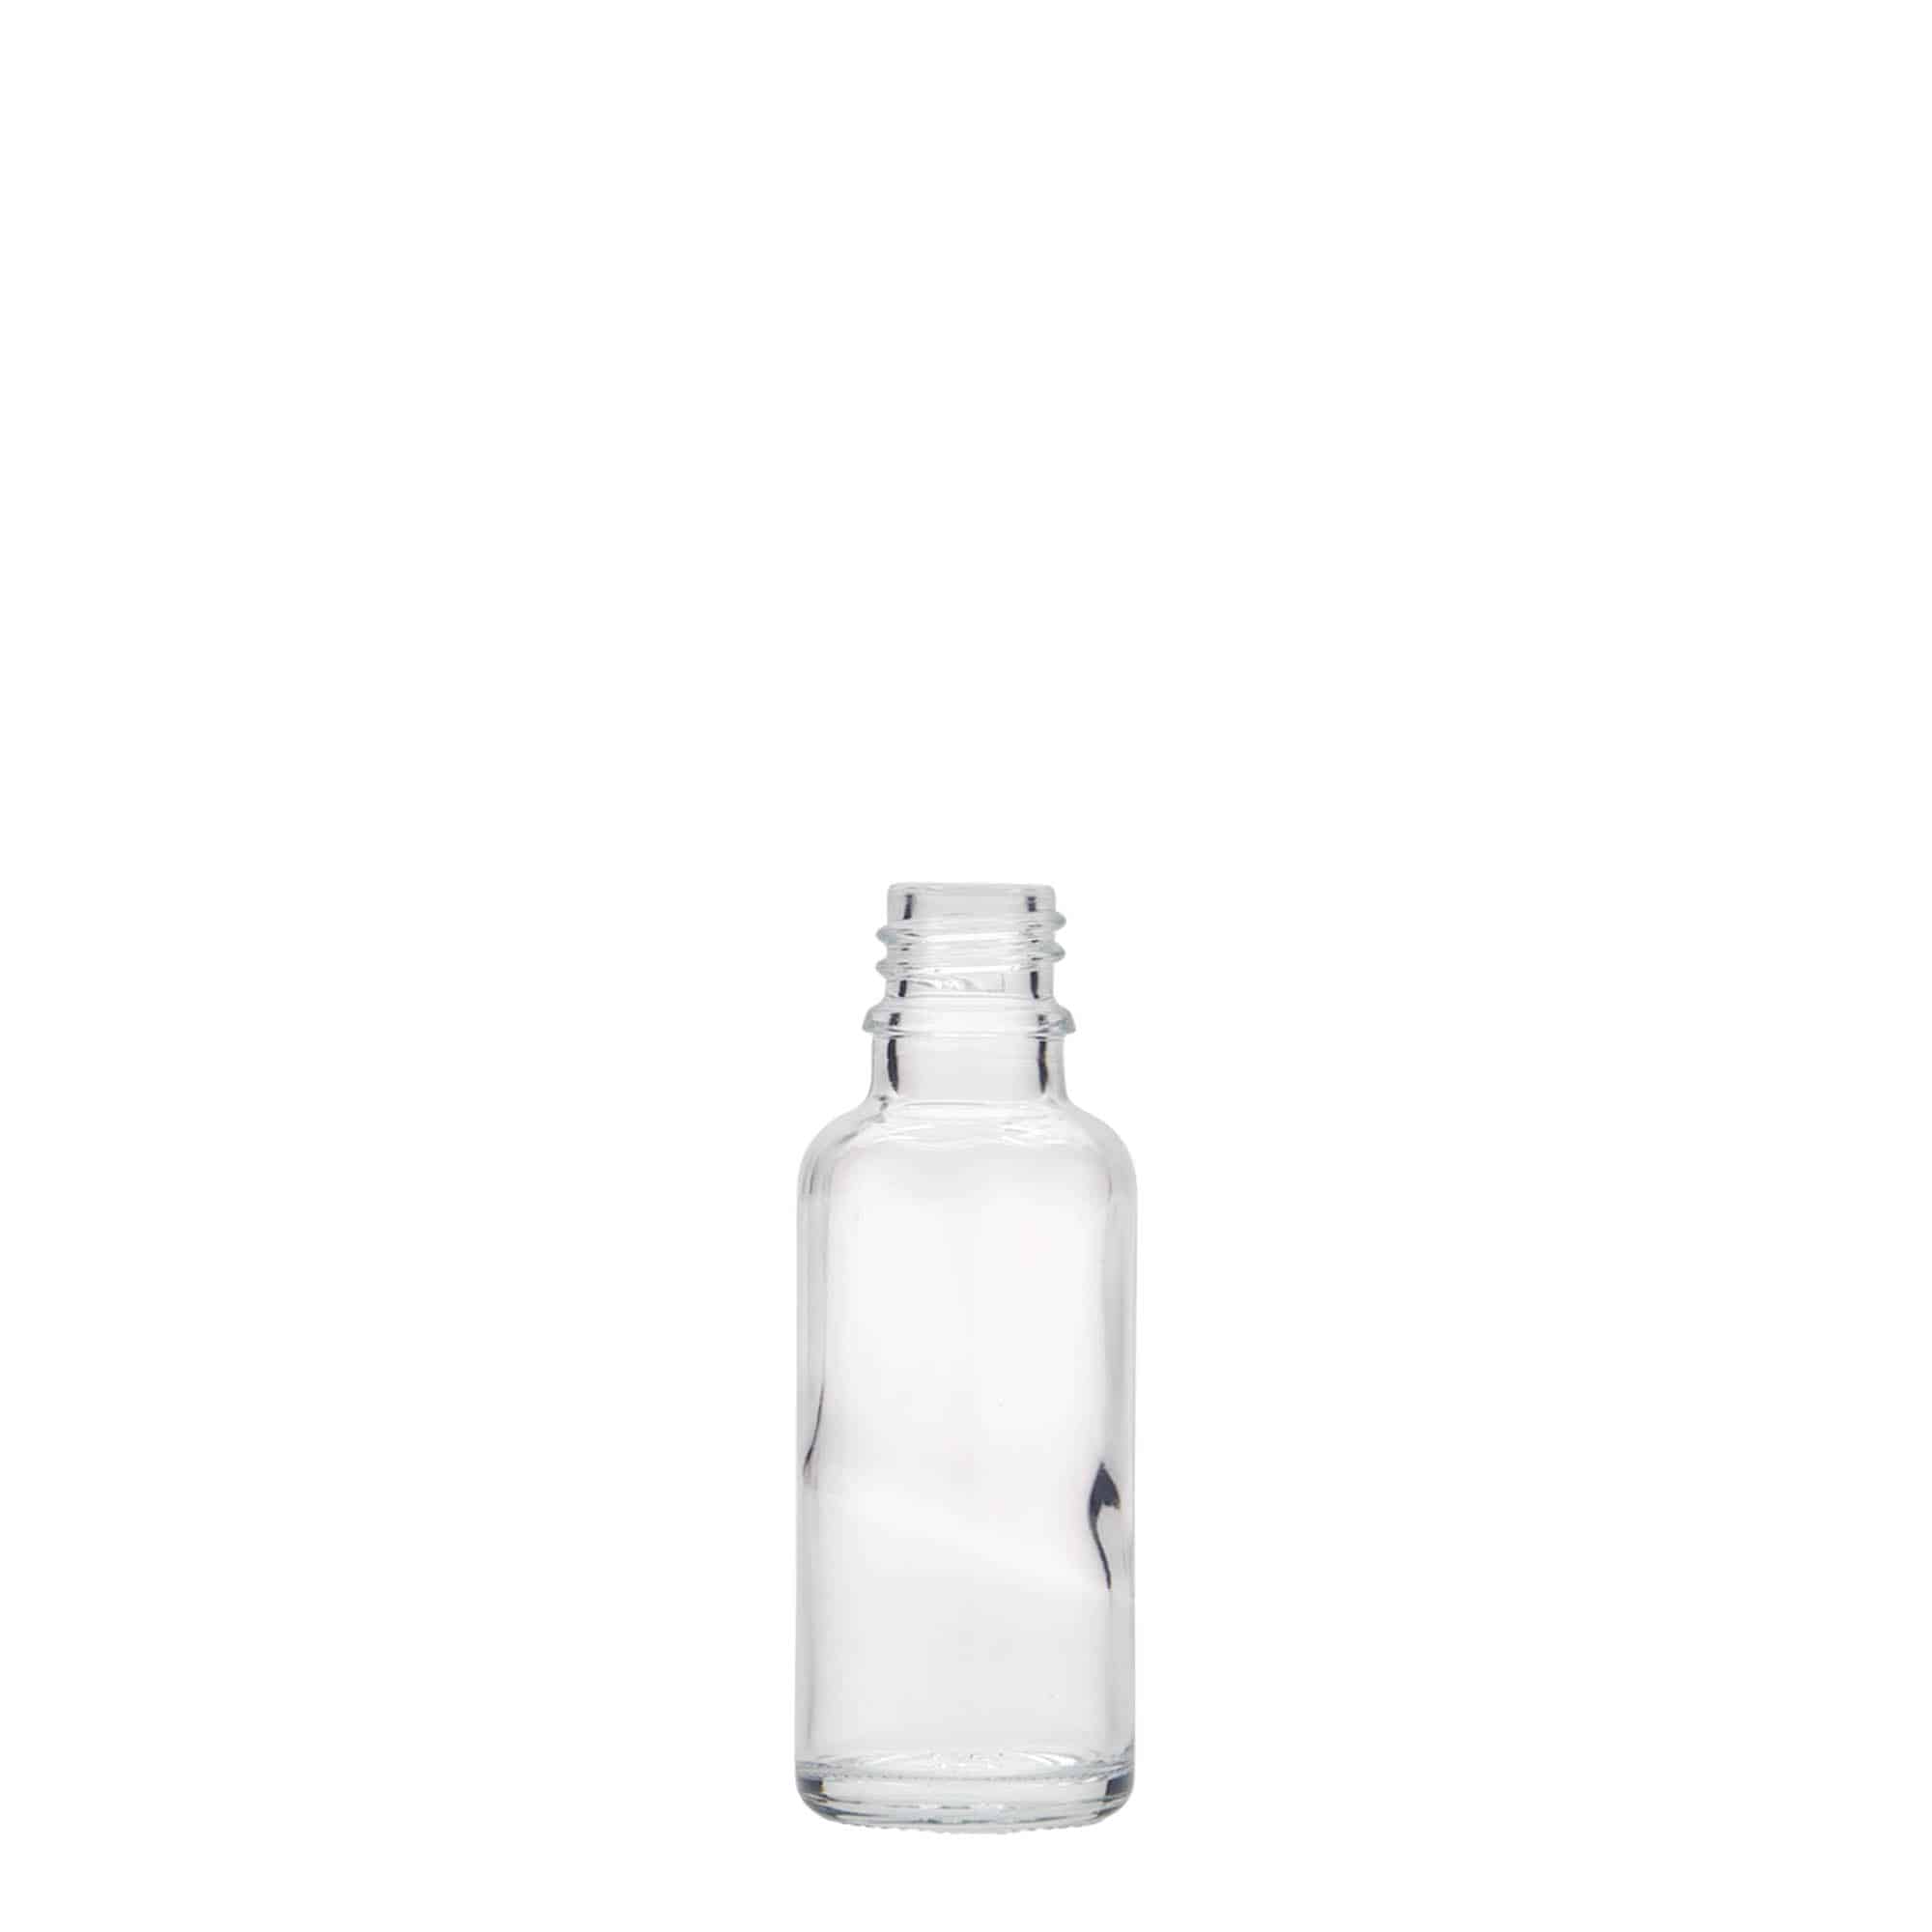 Flacon pharmaceutique 30 ml, verre, bouchage: DIN 18